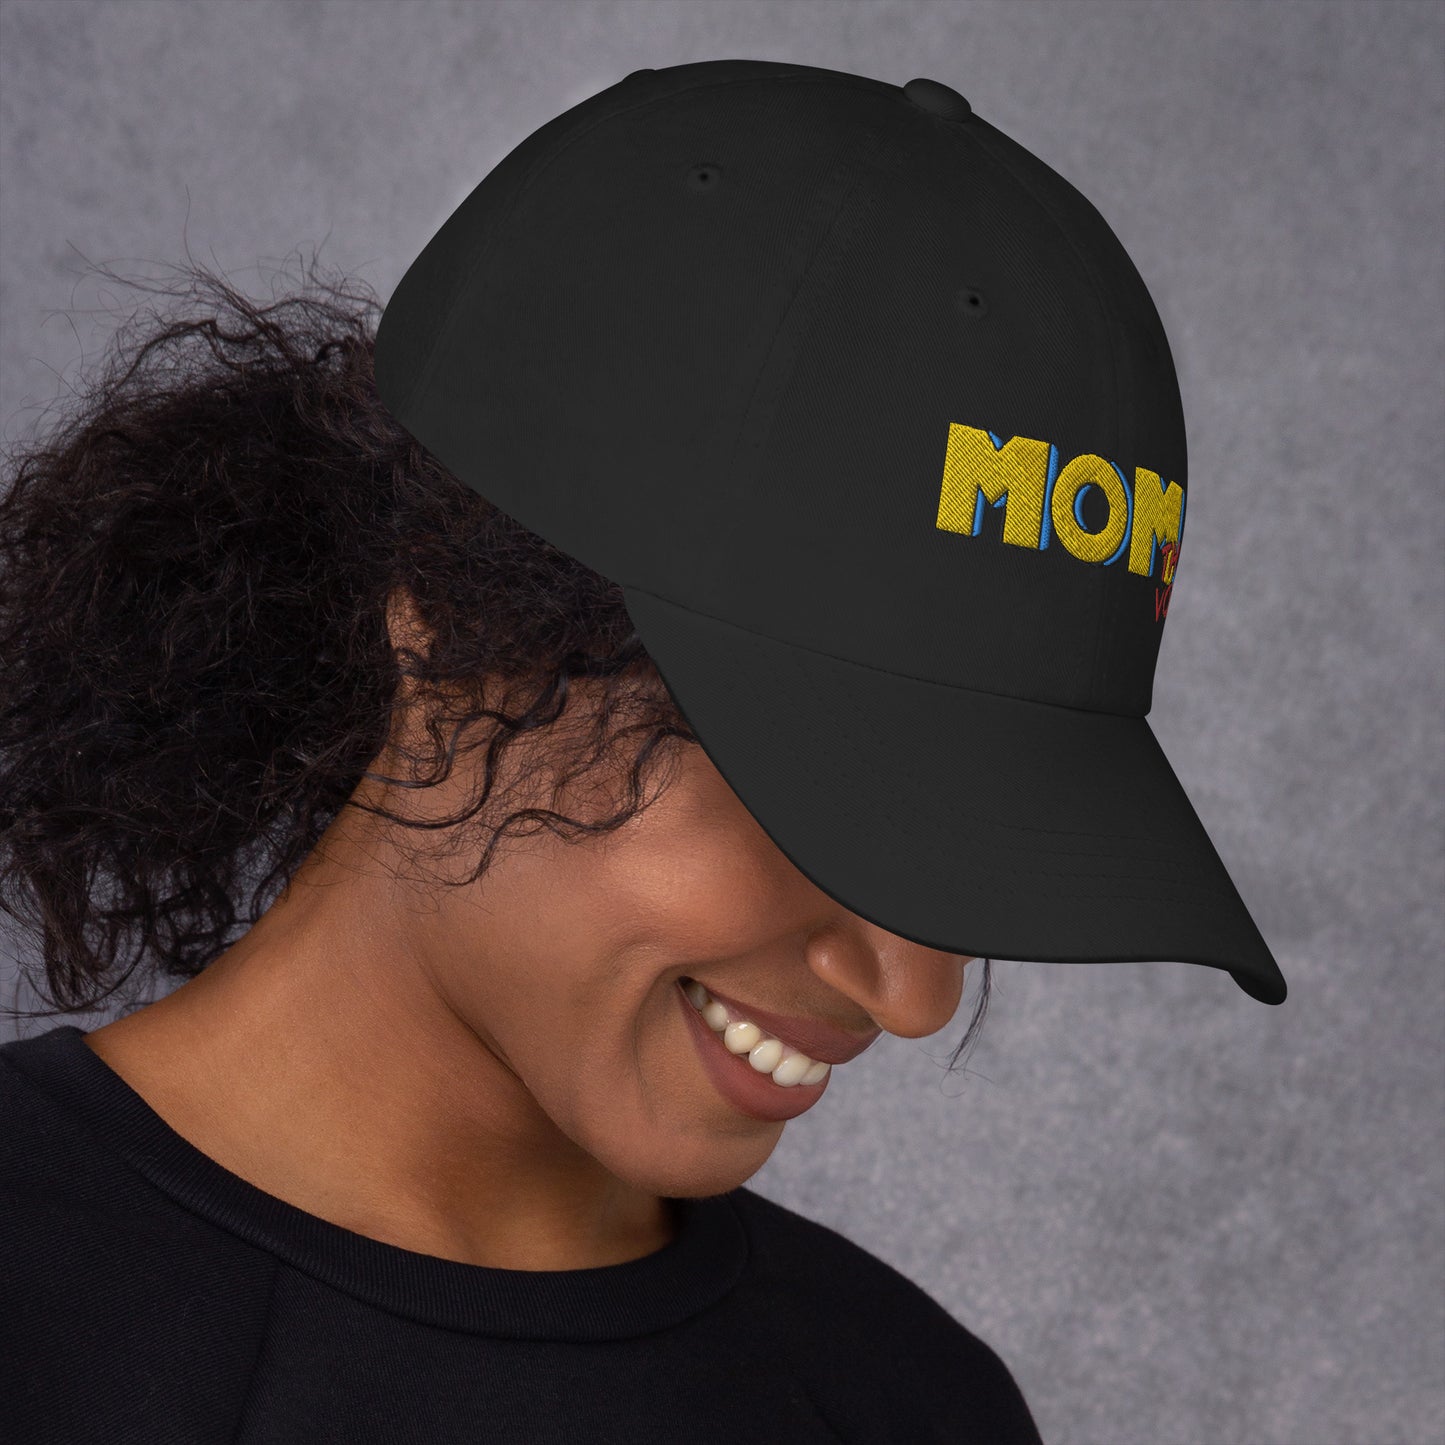 MomTheVote Hat